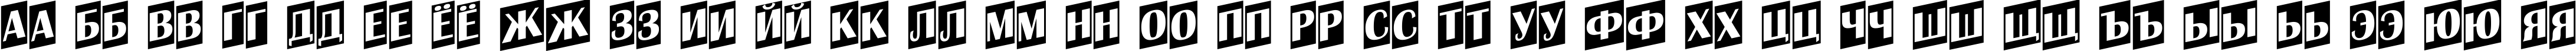 Пример написания русского алфавита шрифтом a_AlbionicTitulCmUp